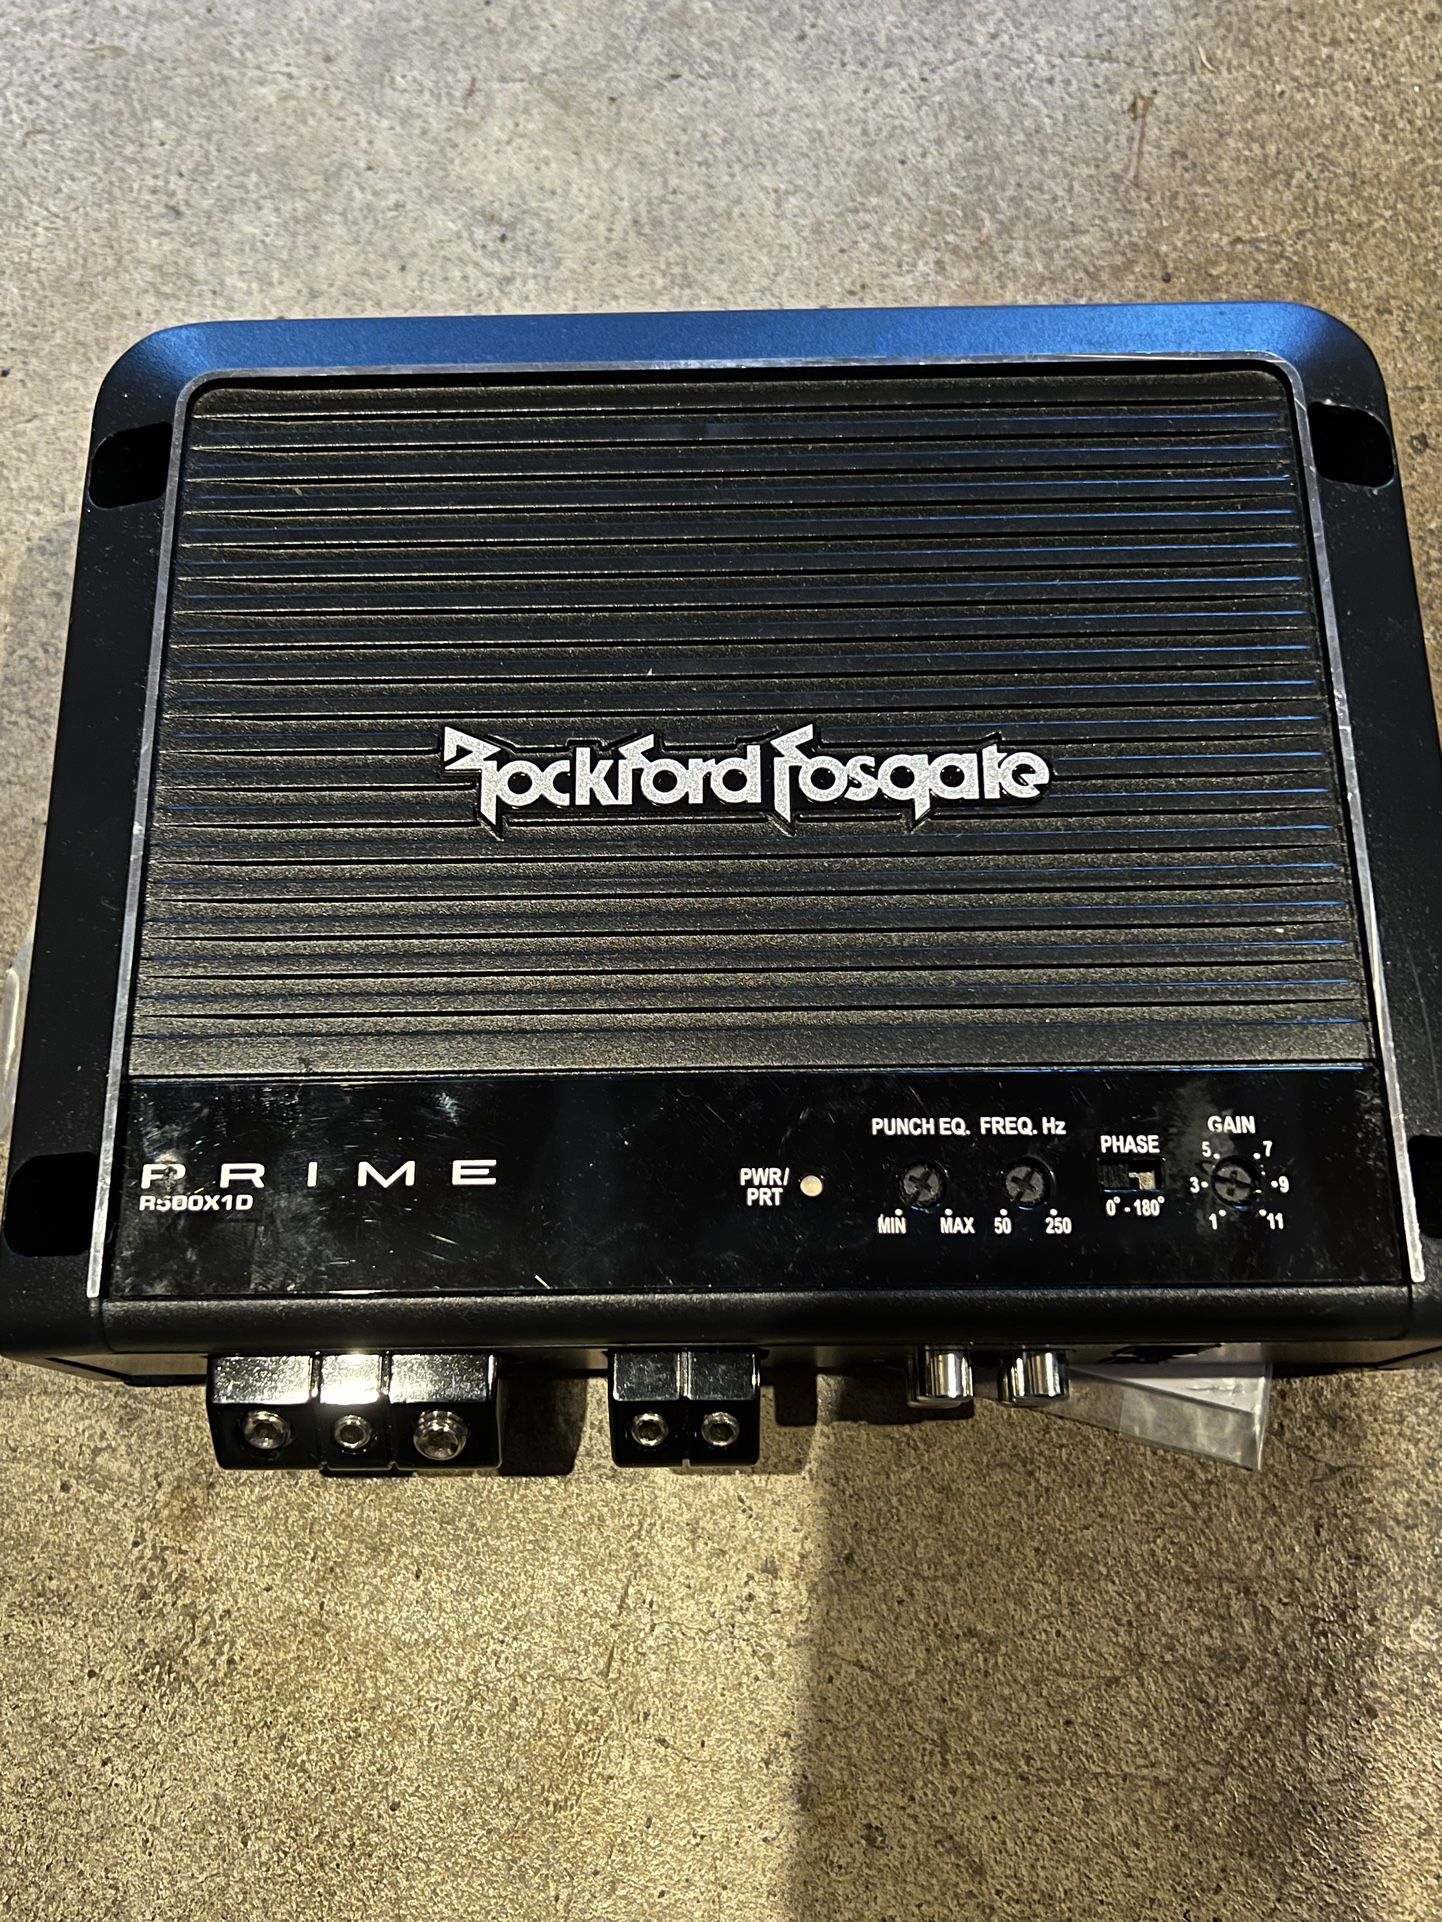 Rockford Fosgate Prime 500w  Amp